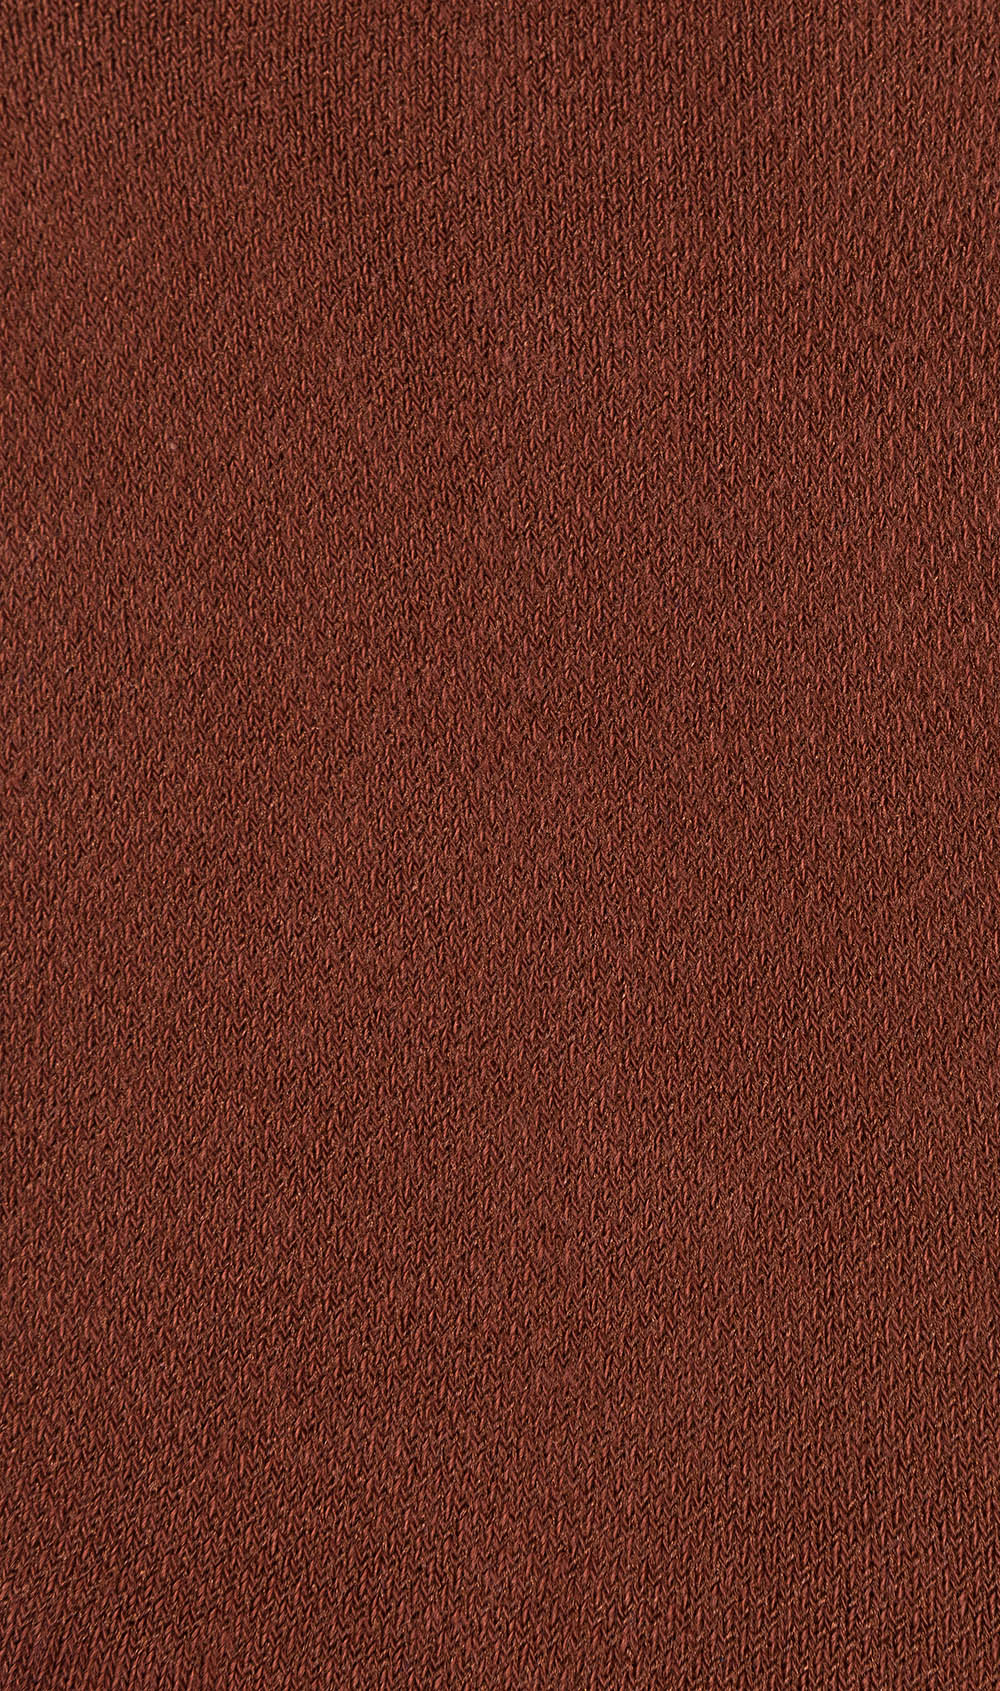 Burnt Golden Brown Low-Cut Socks Pattern